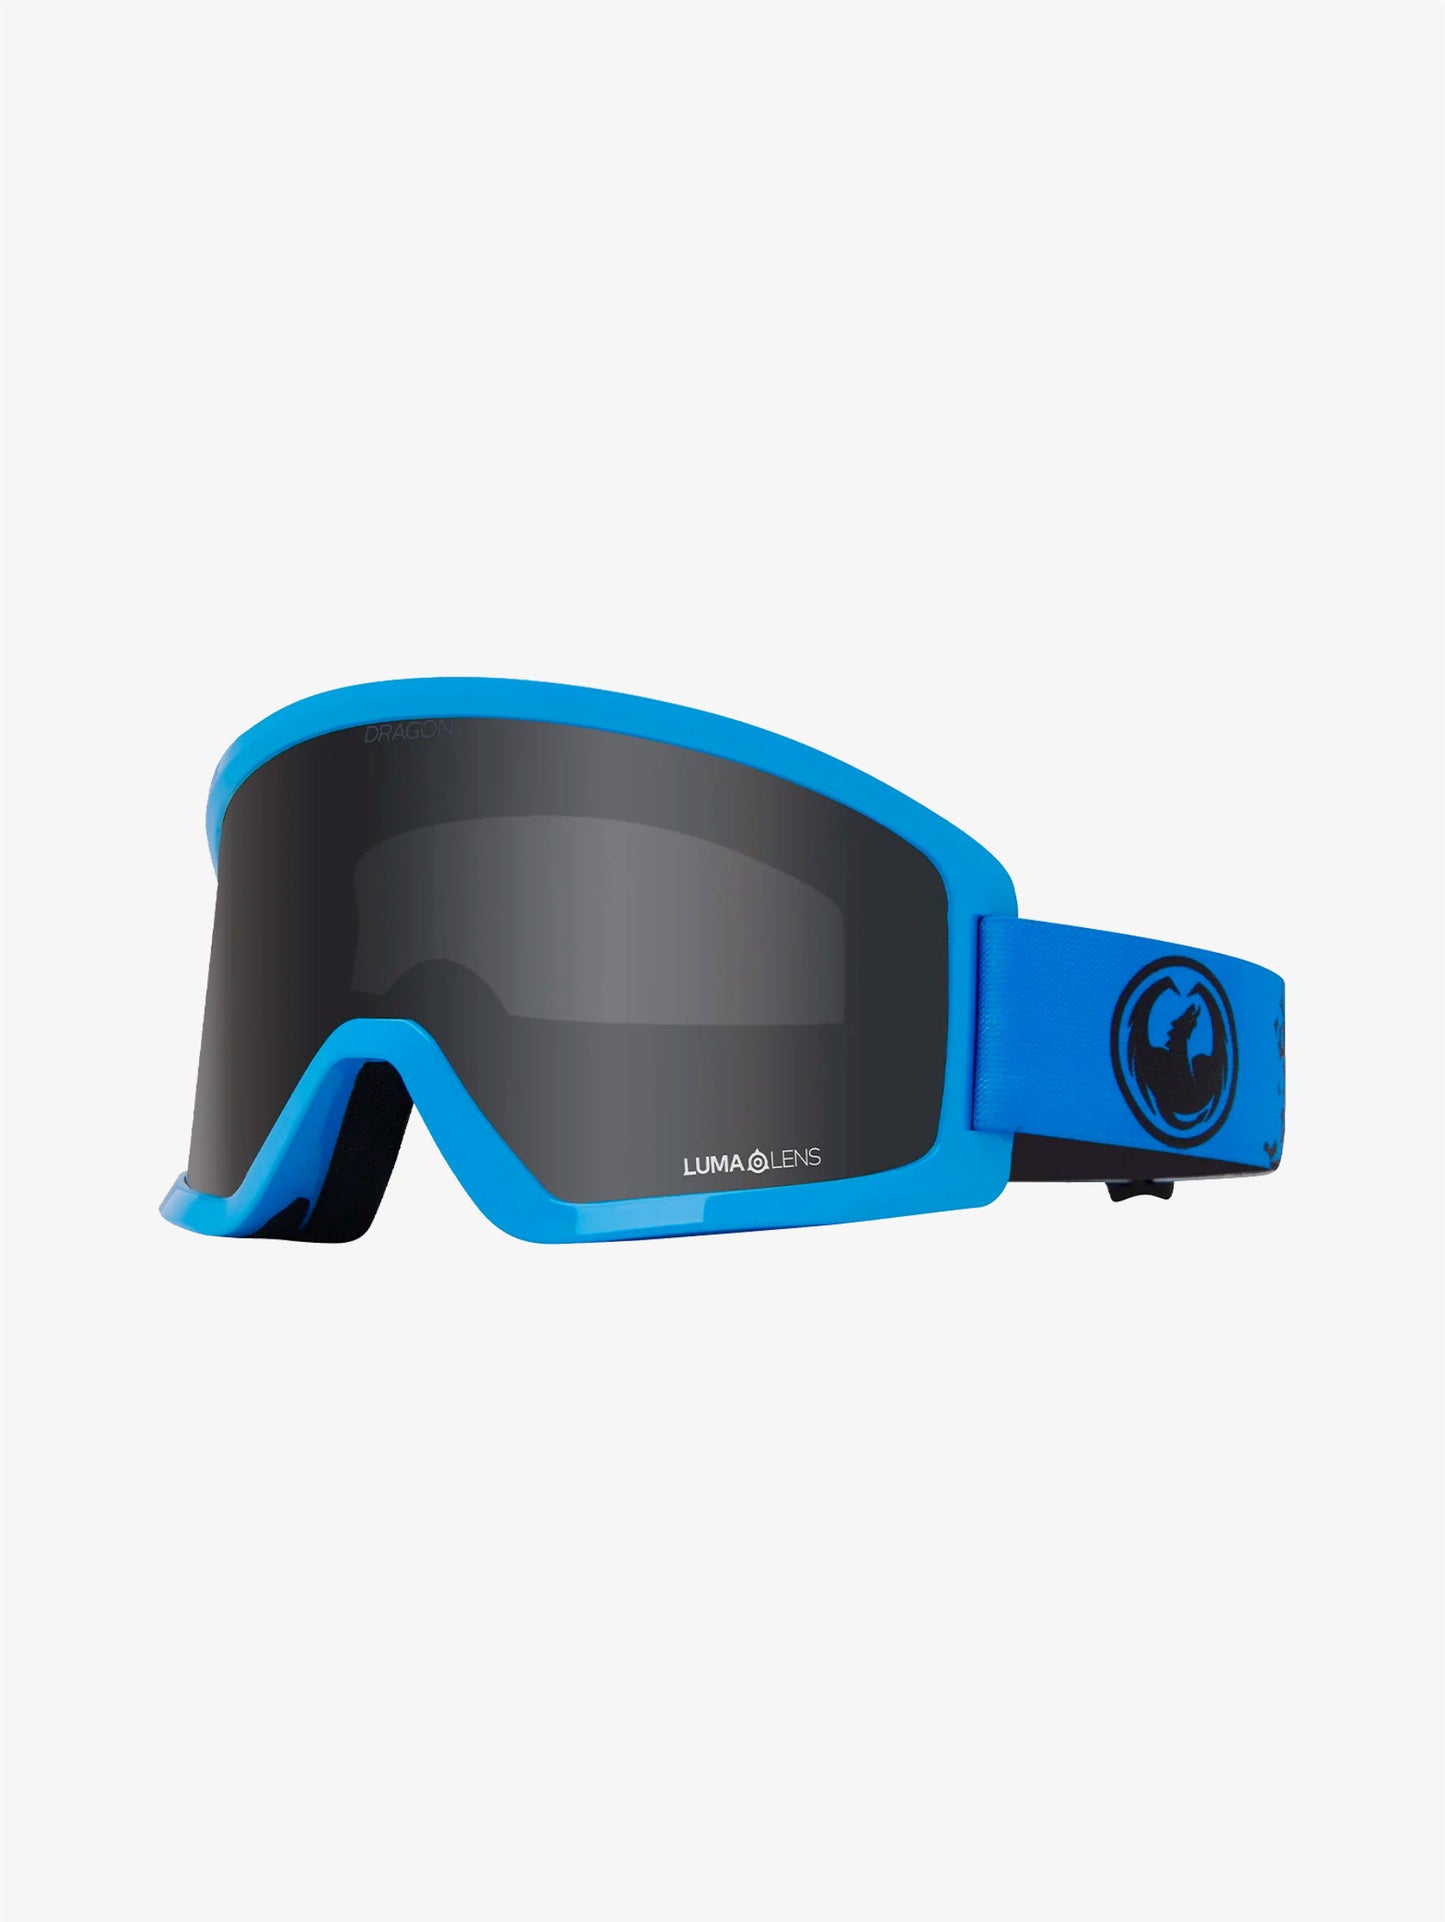 DX3 L OTG snowboard ski goggles blasted / dark smoke